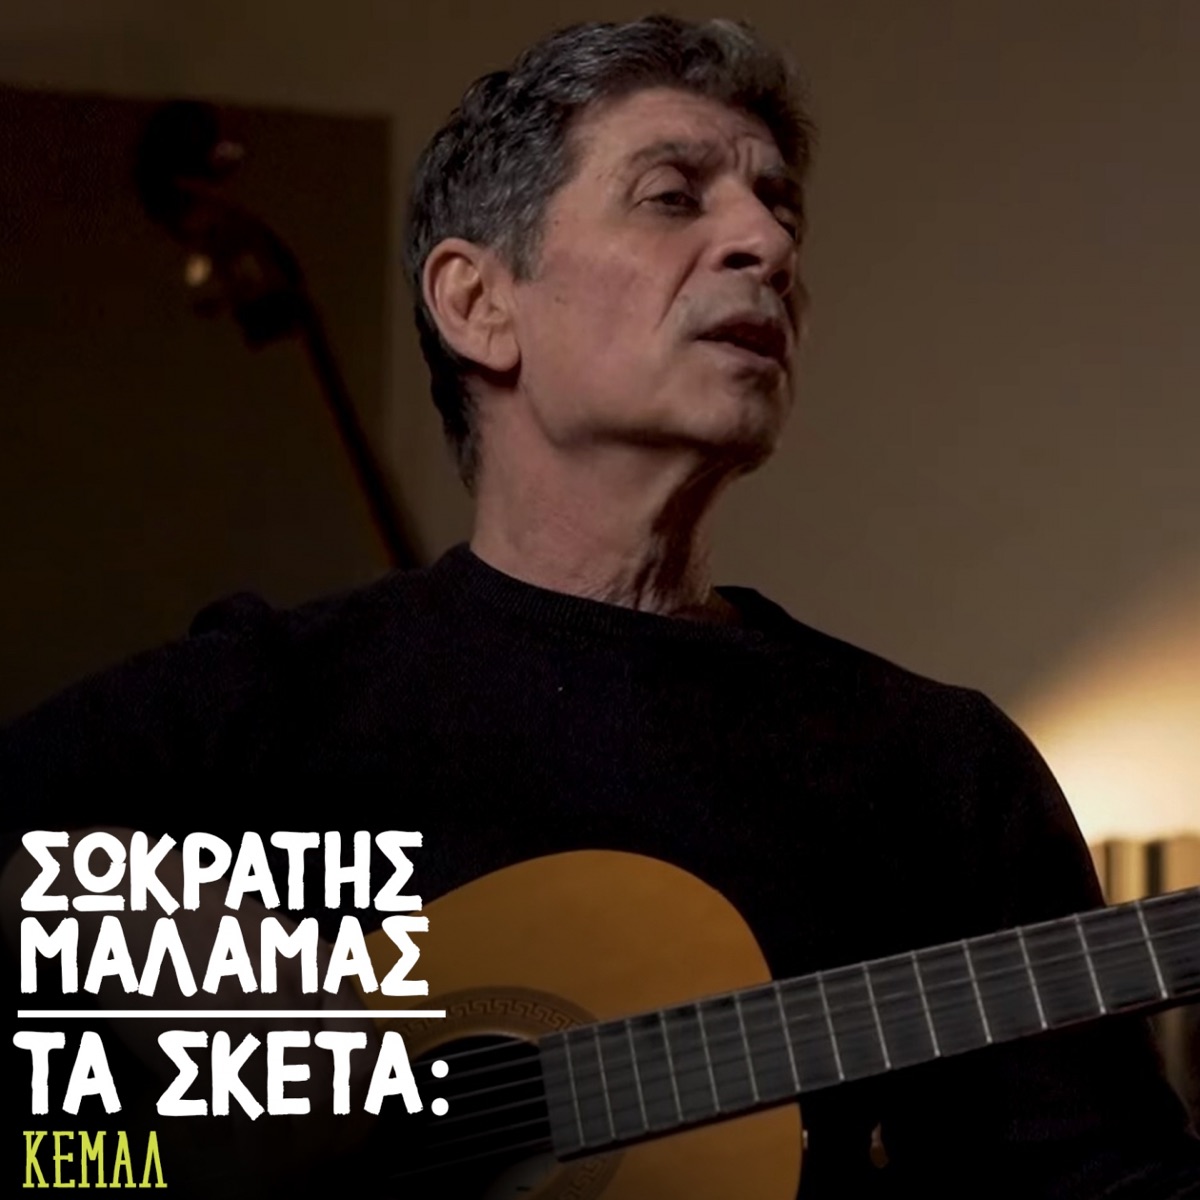 Ta Sketa: Kemal - Single - Album by Sokratis Malamas - Apple Music